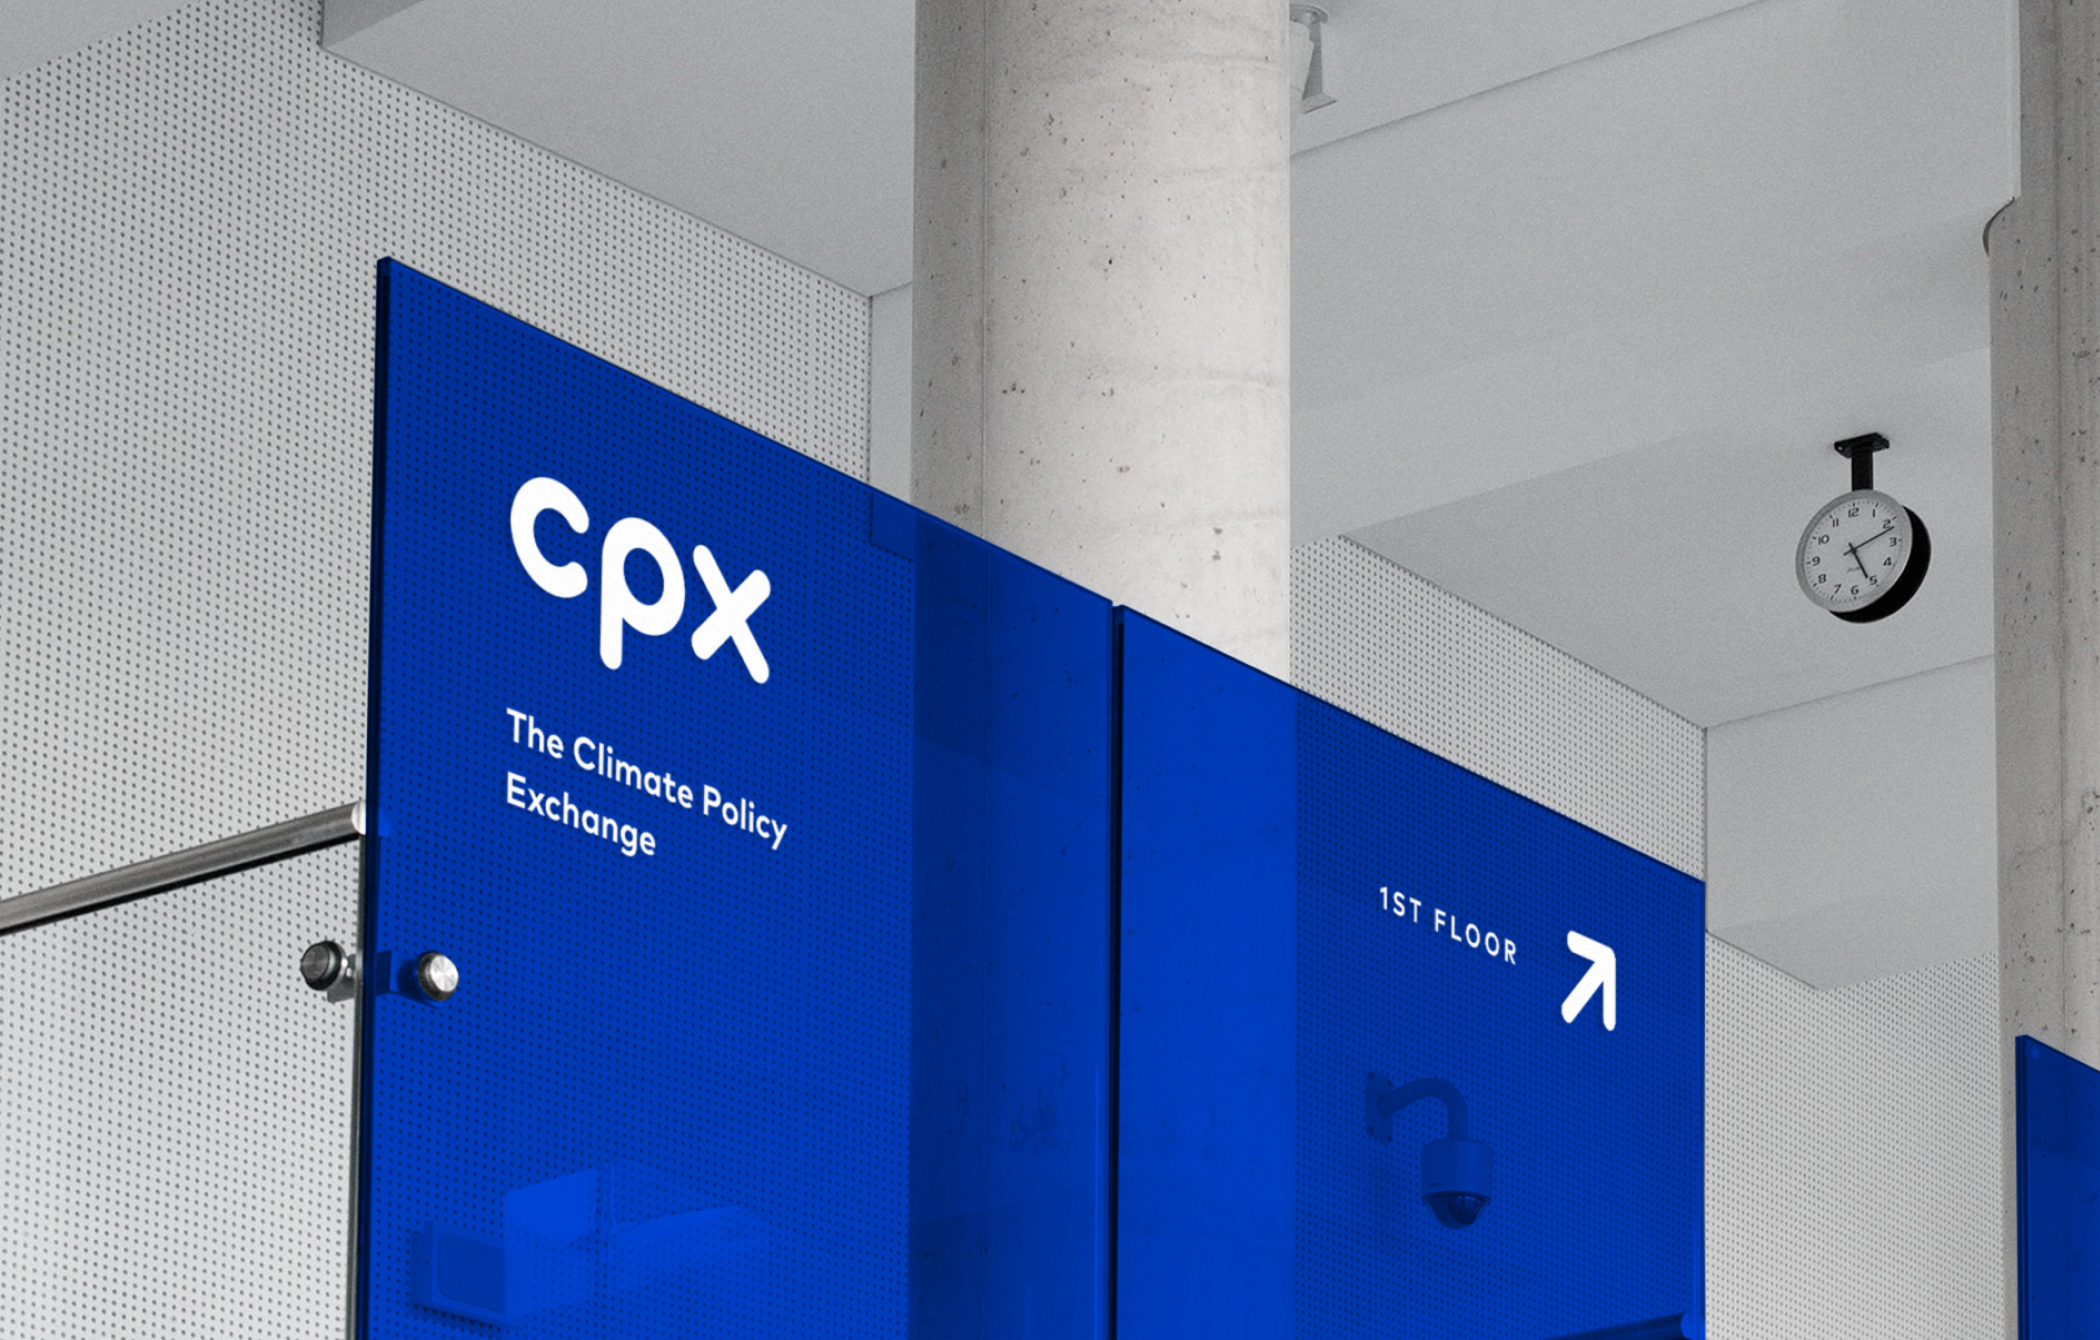 cpx-indoor-signage